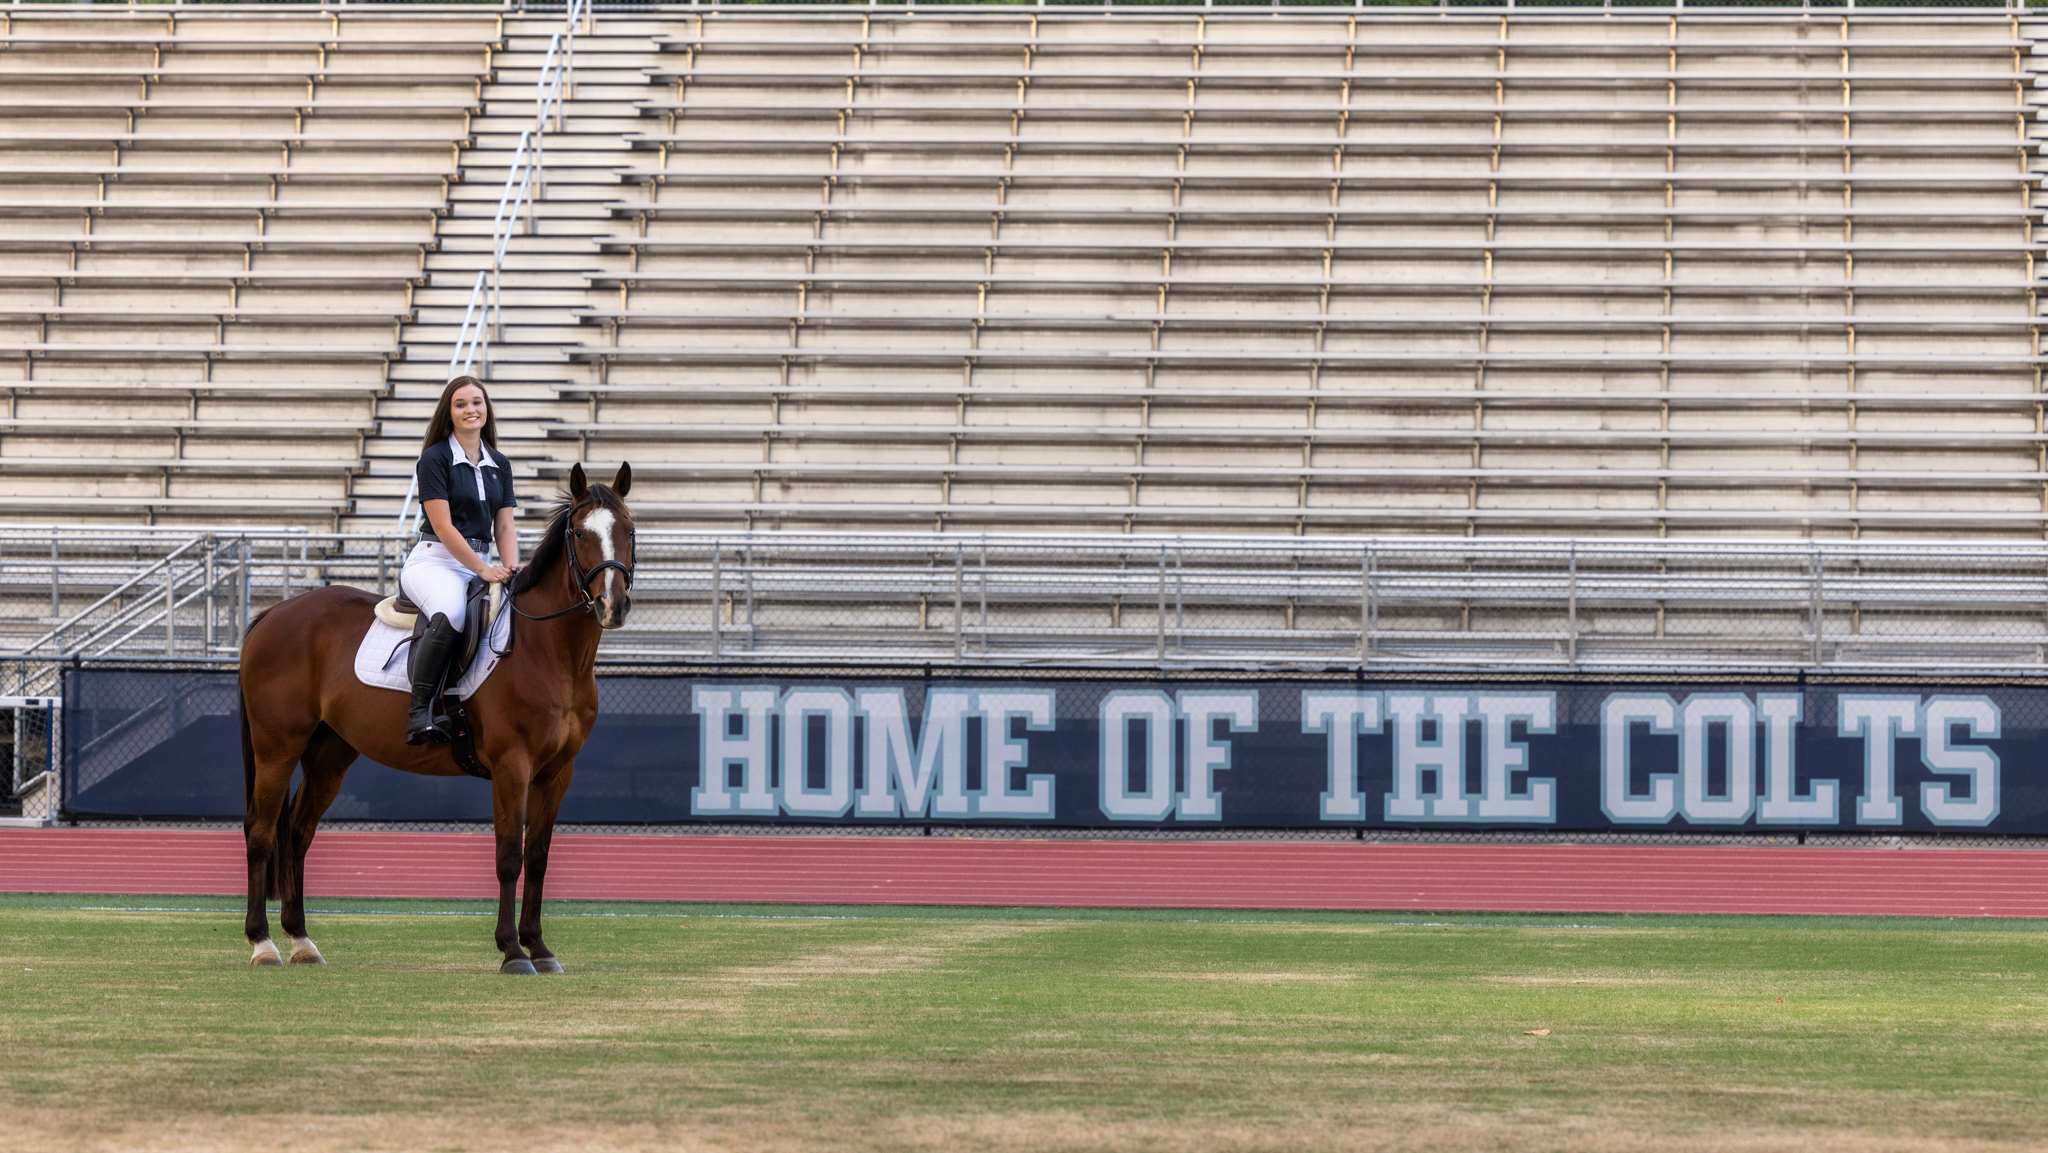 High school senior pics with horse in Dalton Georgia